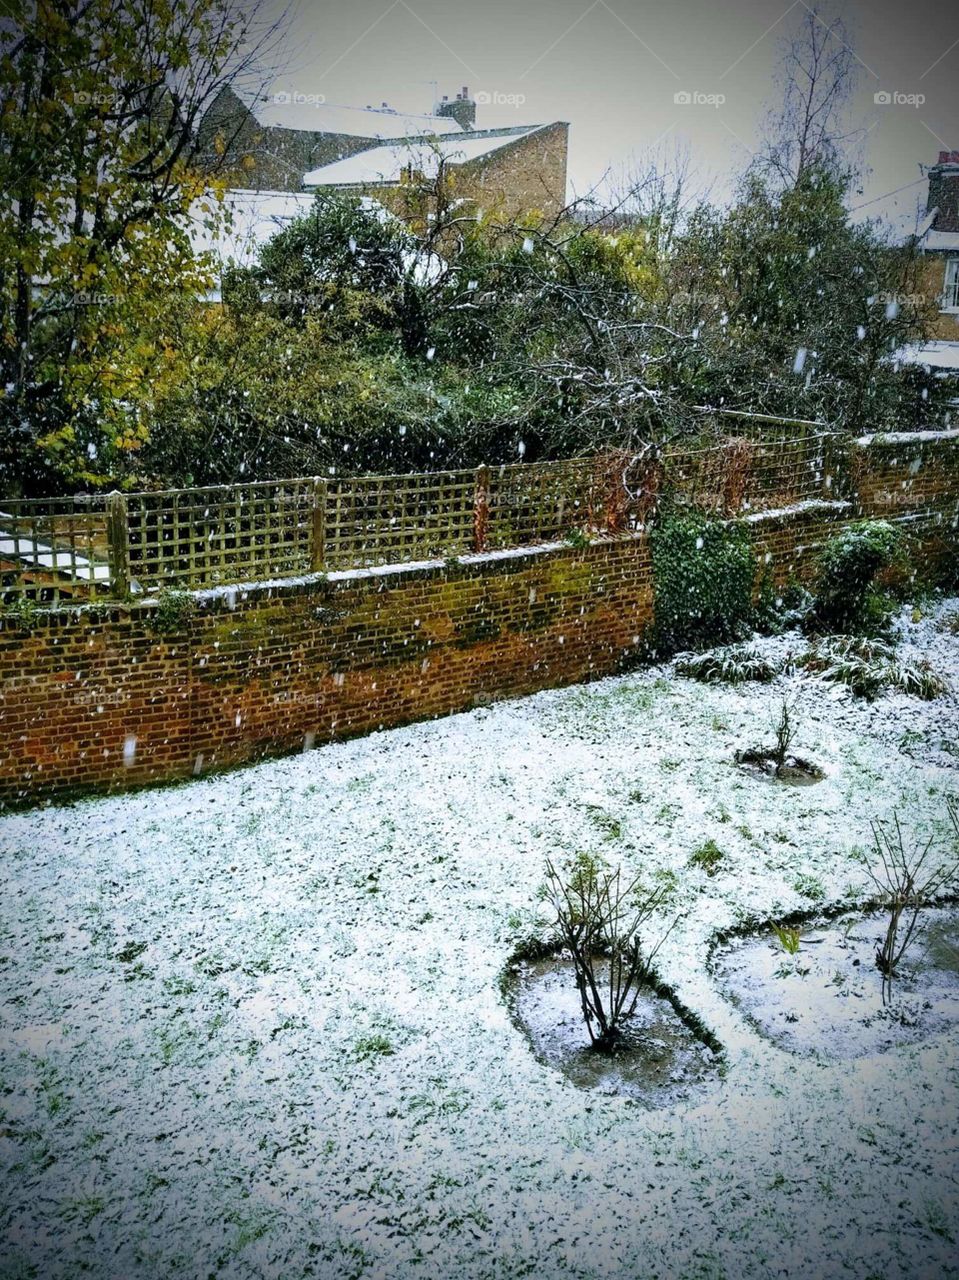 Snowfall in London